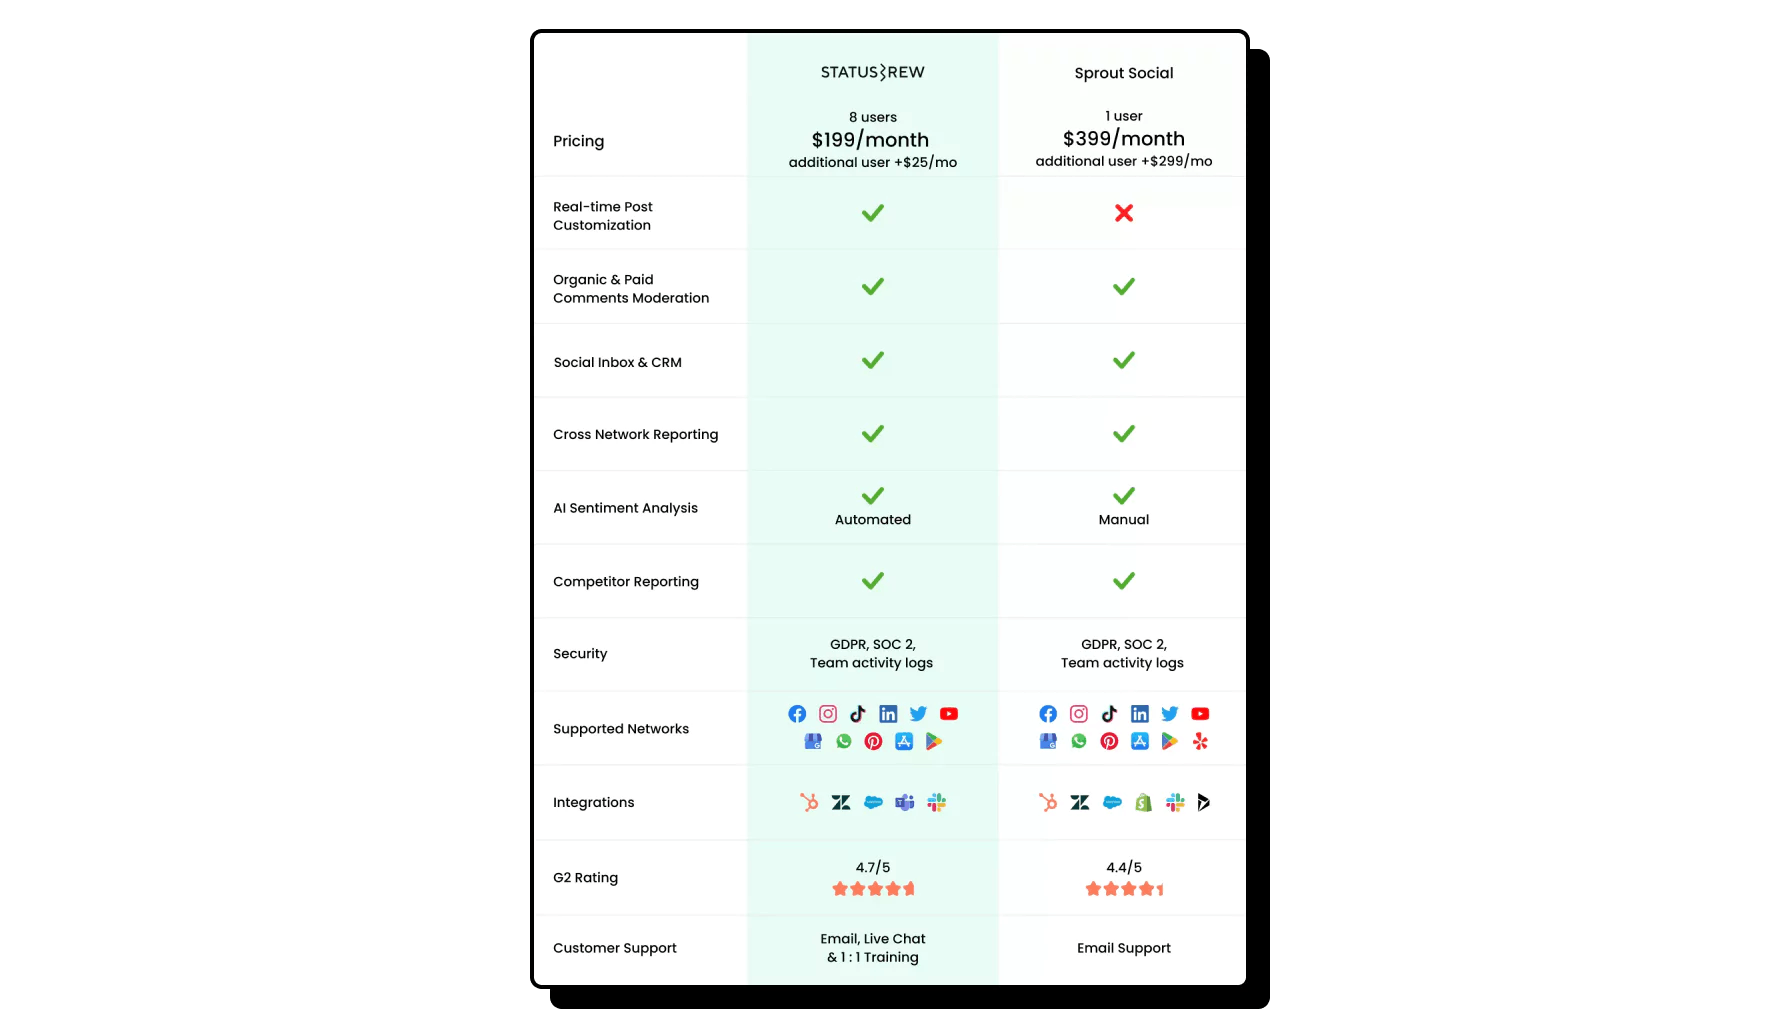 Statusbrew vs. Sprout Social (Features Comparison Table)